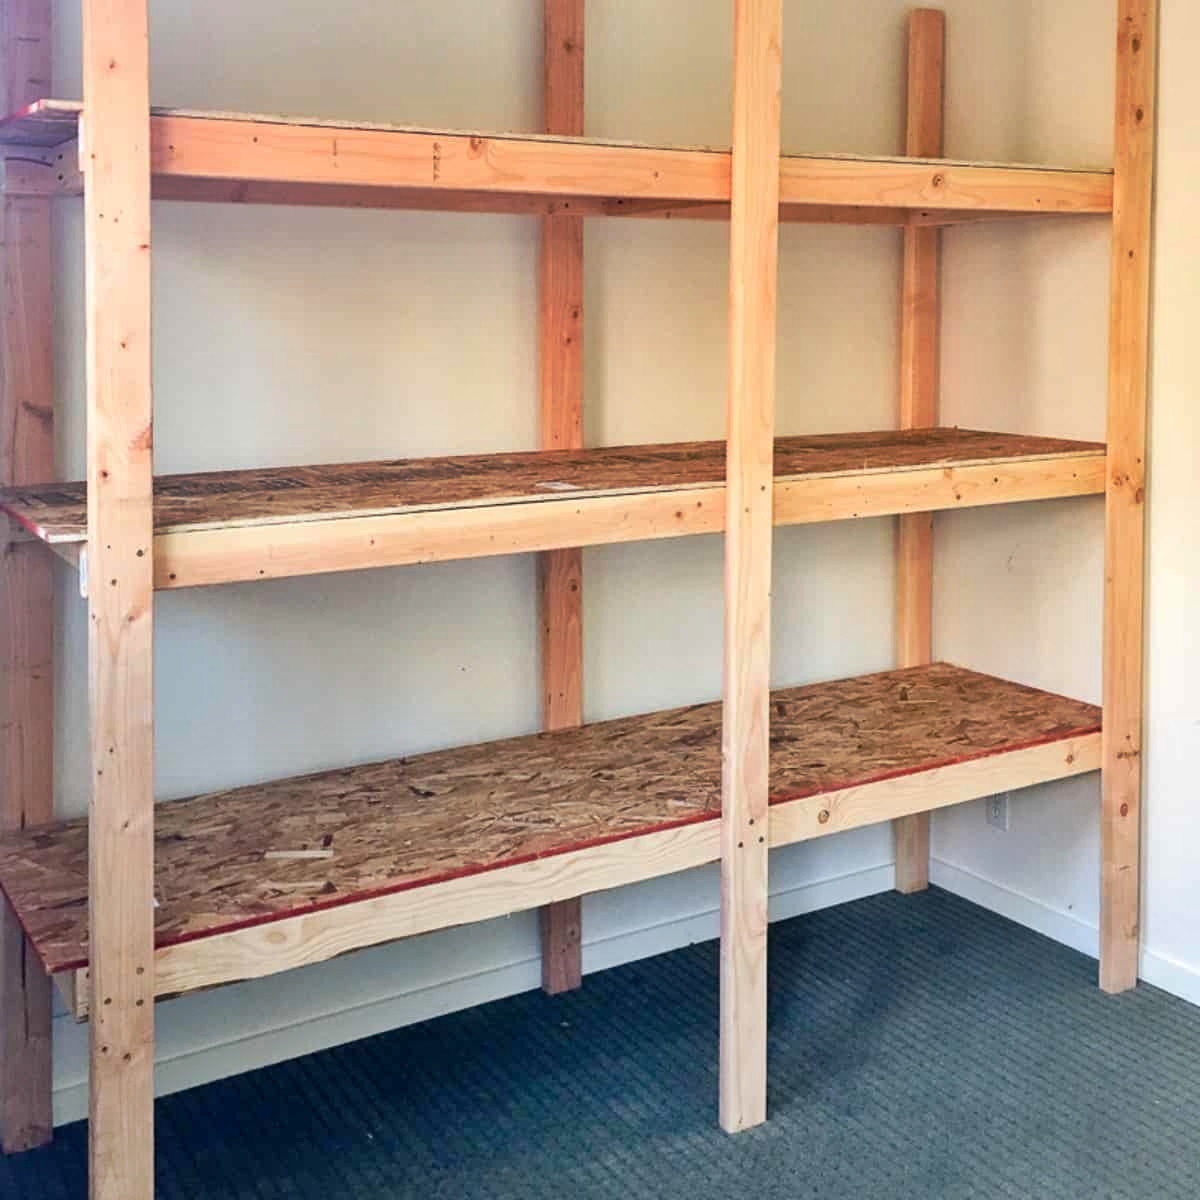 How To Build Wooden Storage Rack